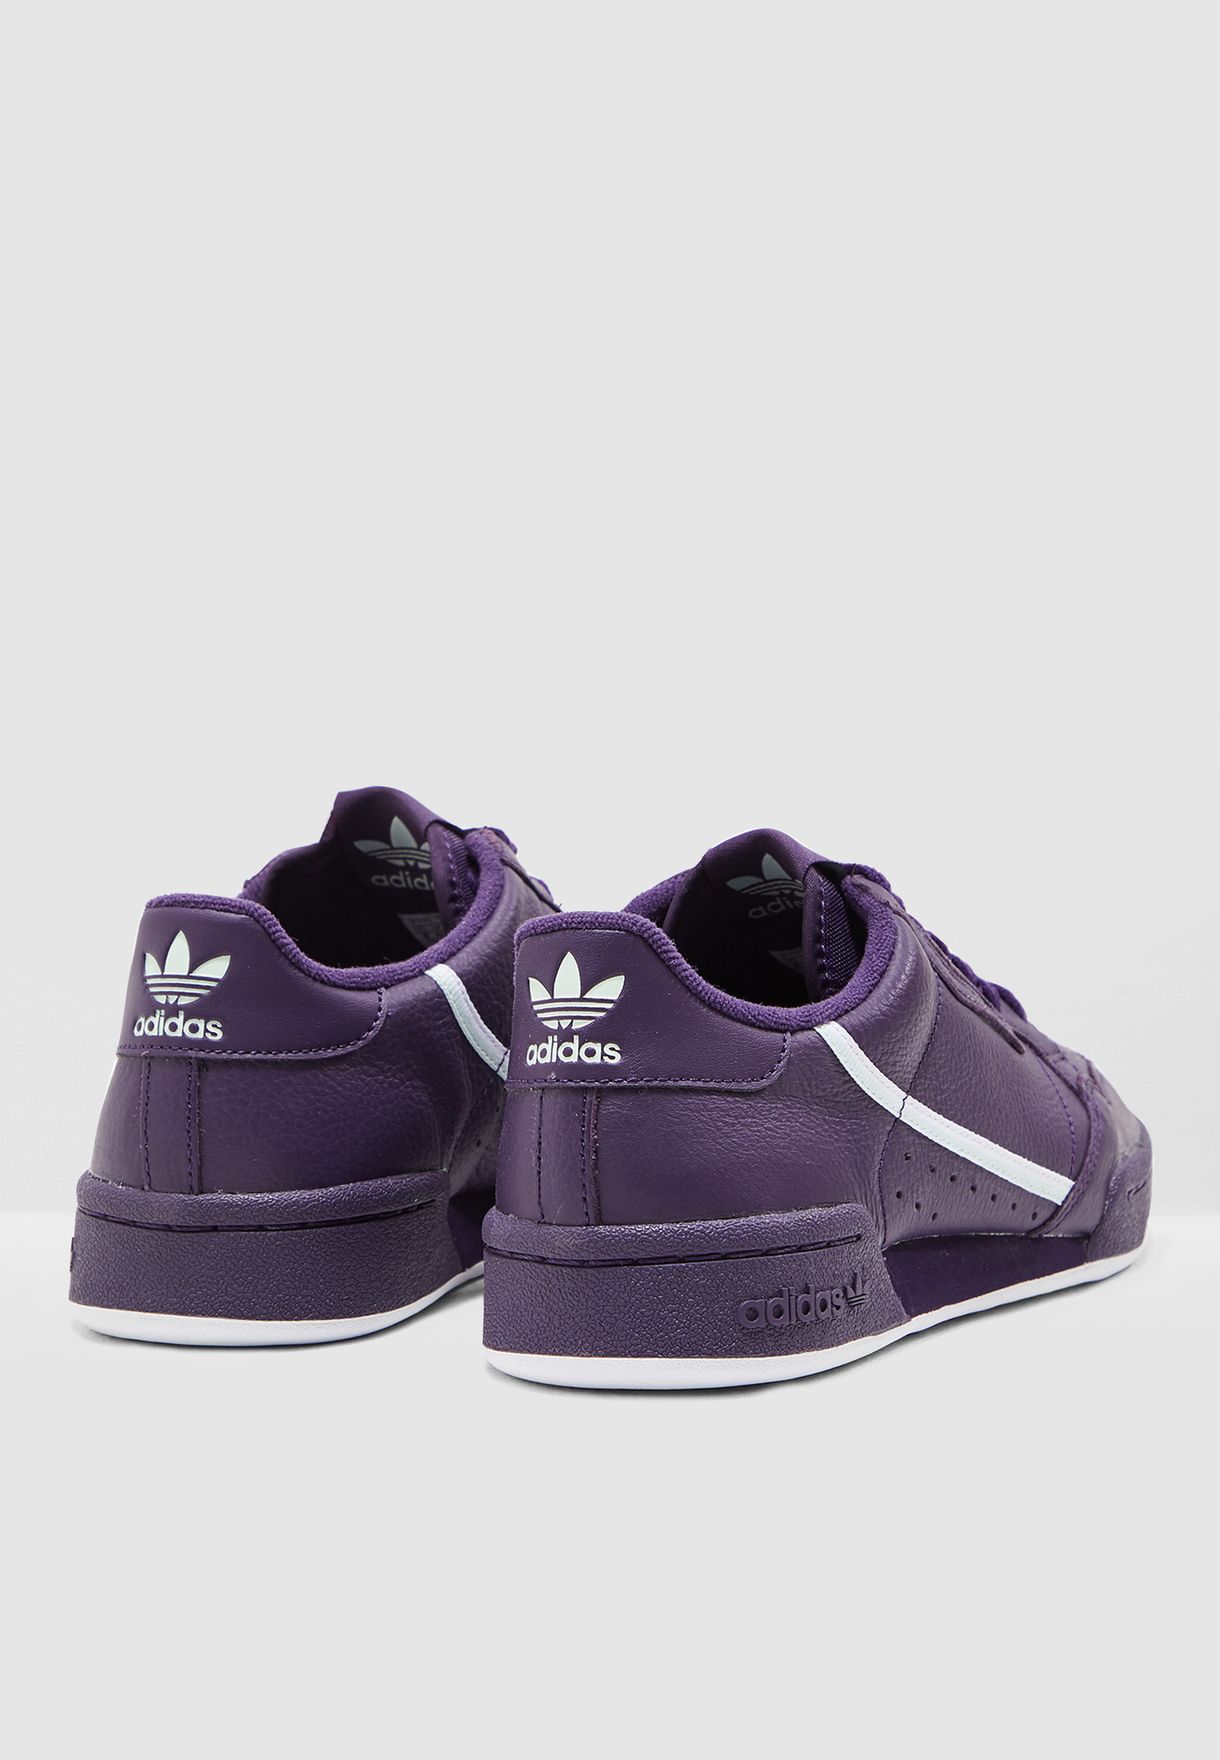 adidas continental 80 purple